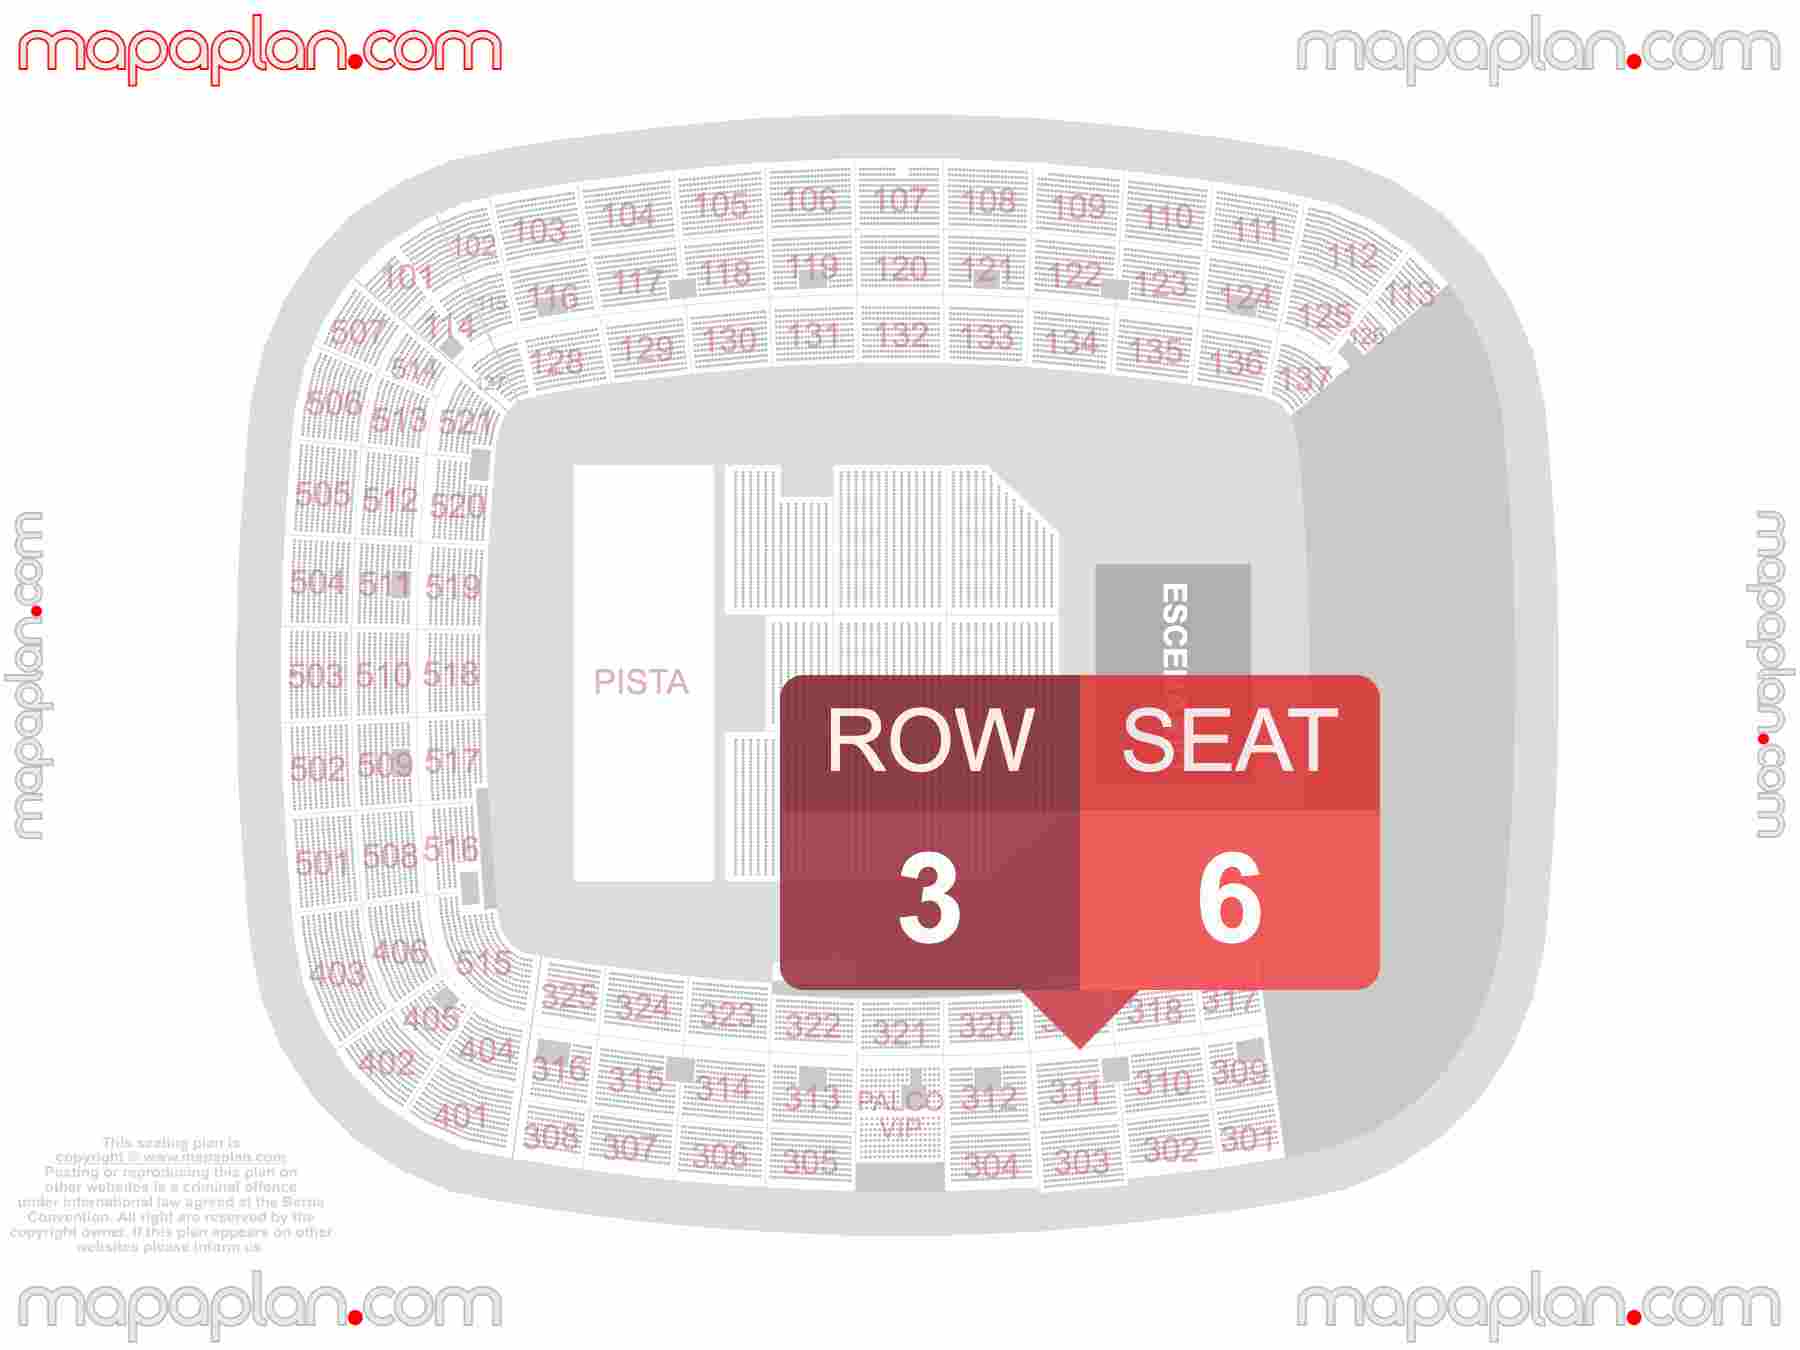 Valencia Estadio Ciudad Stadium seating map Concert & Football (Conciertos & Futbol mapa de asientos) detailed seat numbers and row numbering map with interactive map plan layout